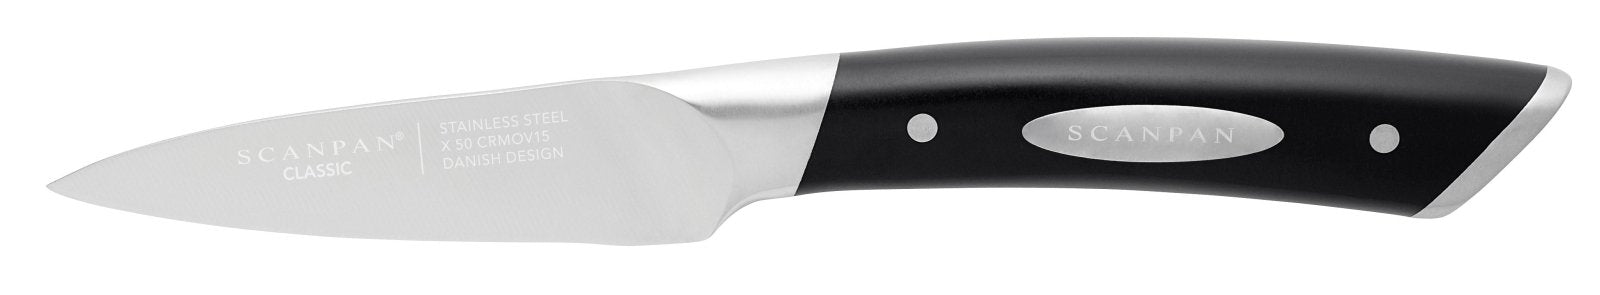 Scanpan Classic 6 Piece Knife Block Set - SP92000600 - The Cotswold Knife Company